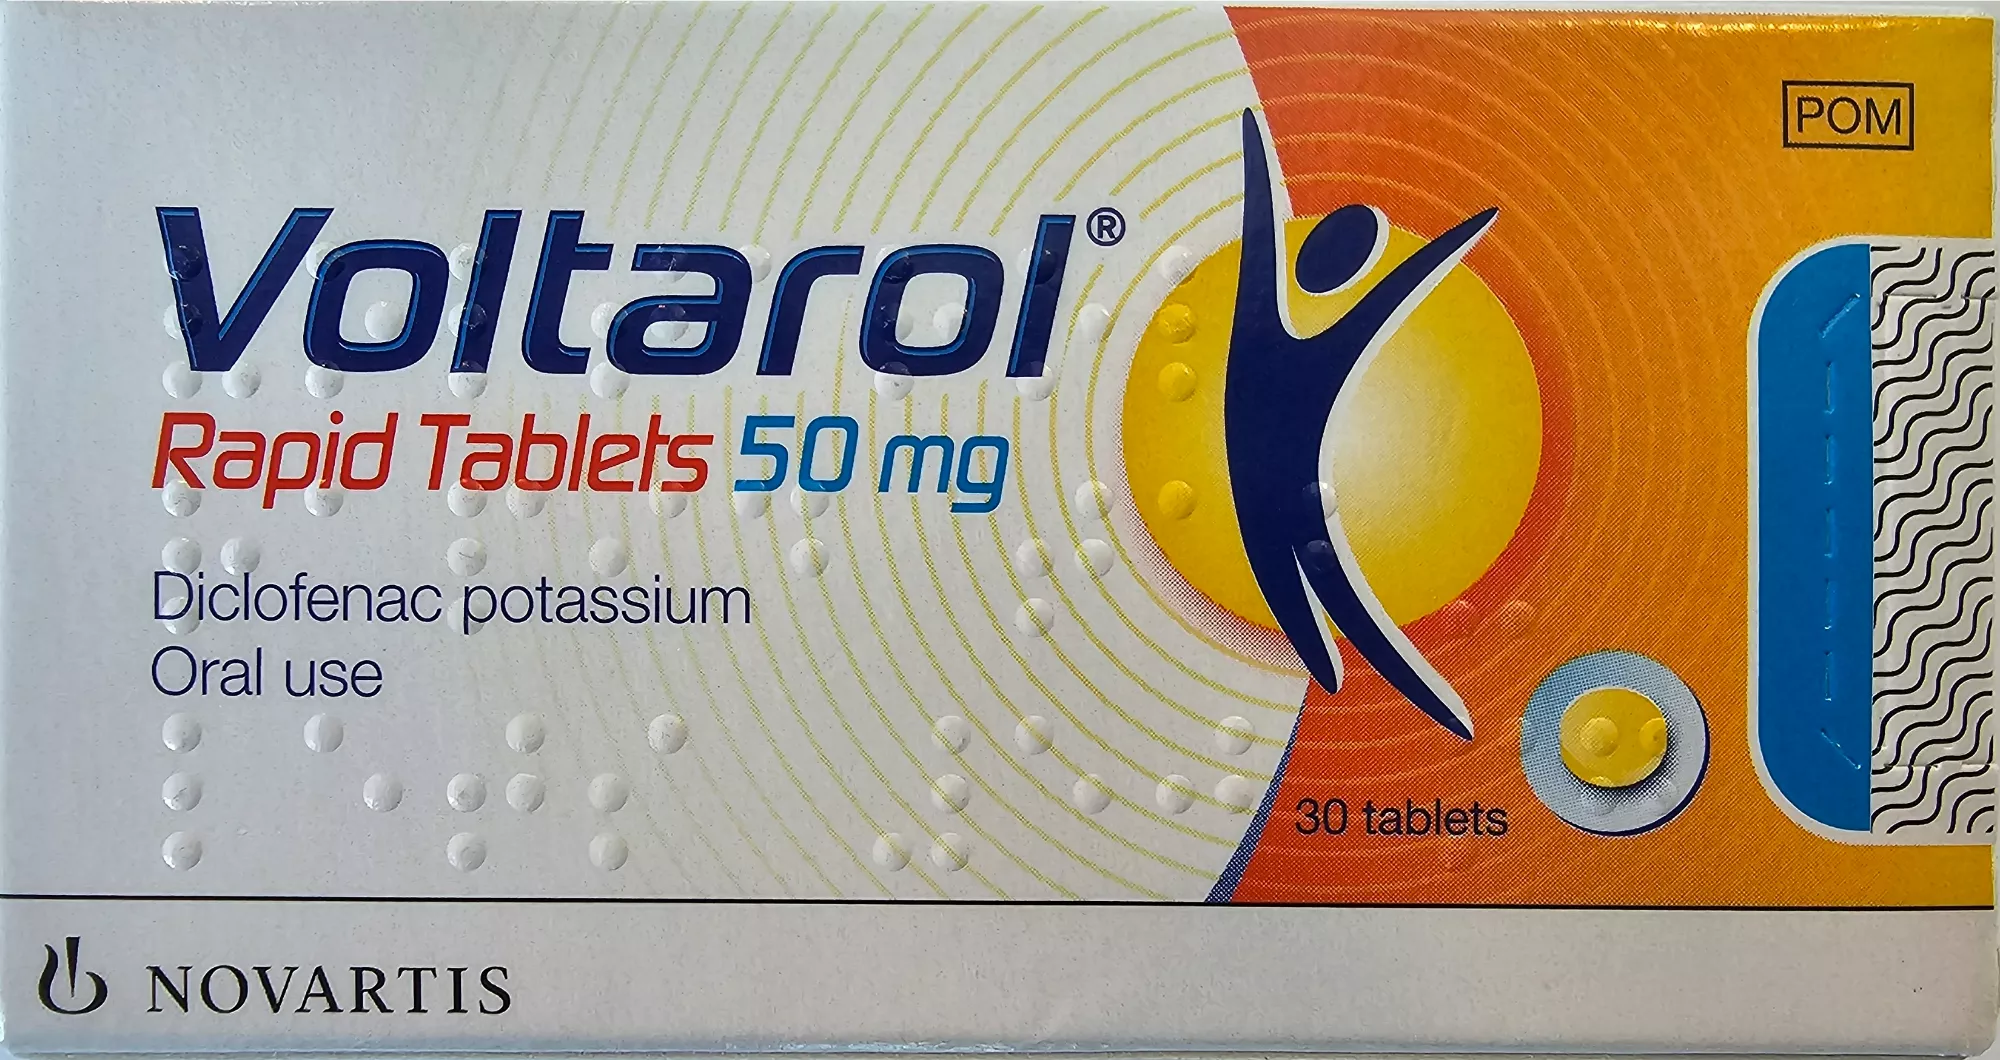 Voltarol tablets